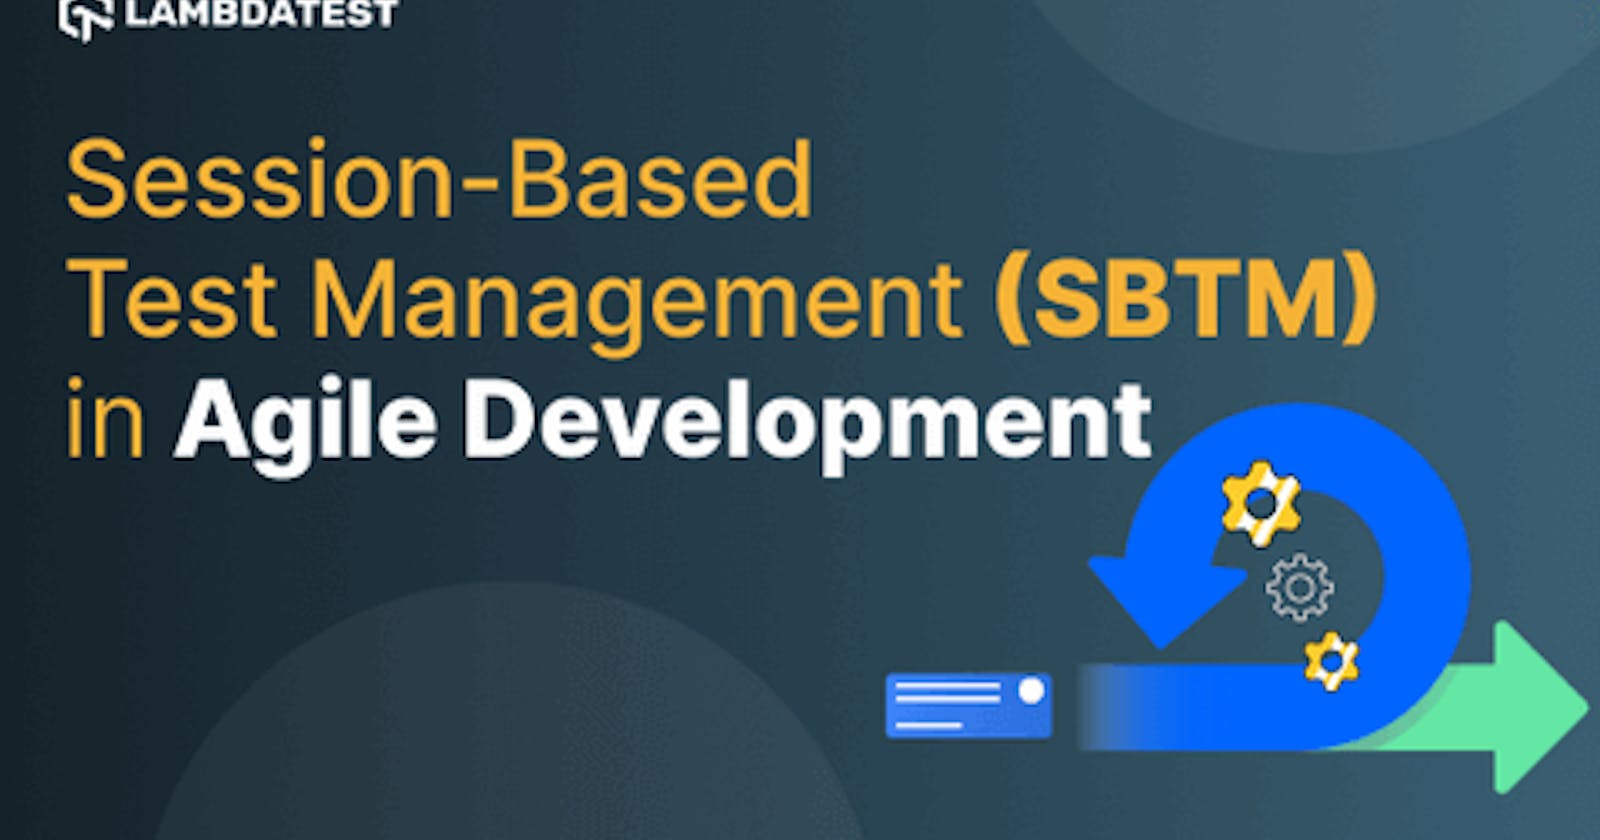 Session-Based Test Management (SBTM) in Agile Development